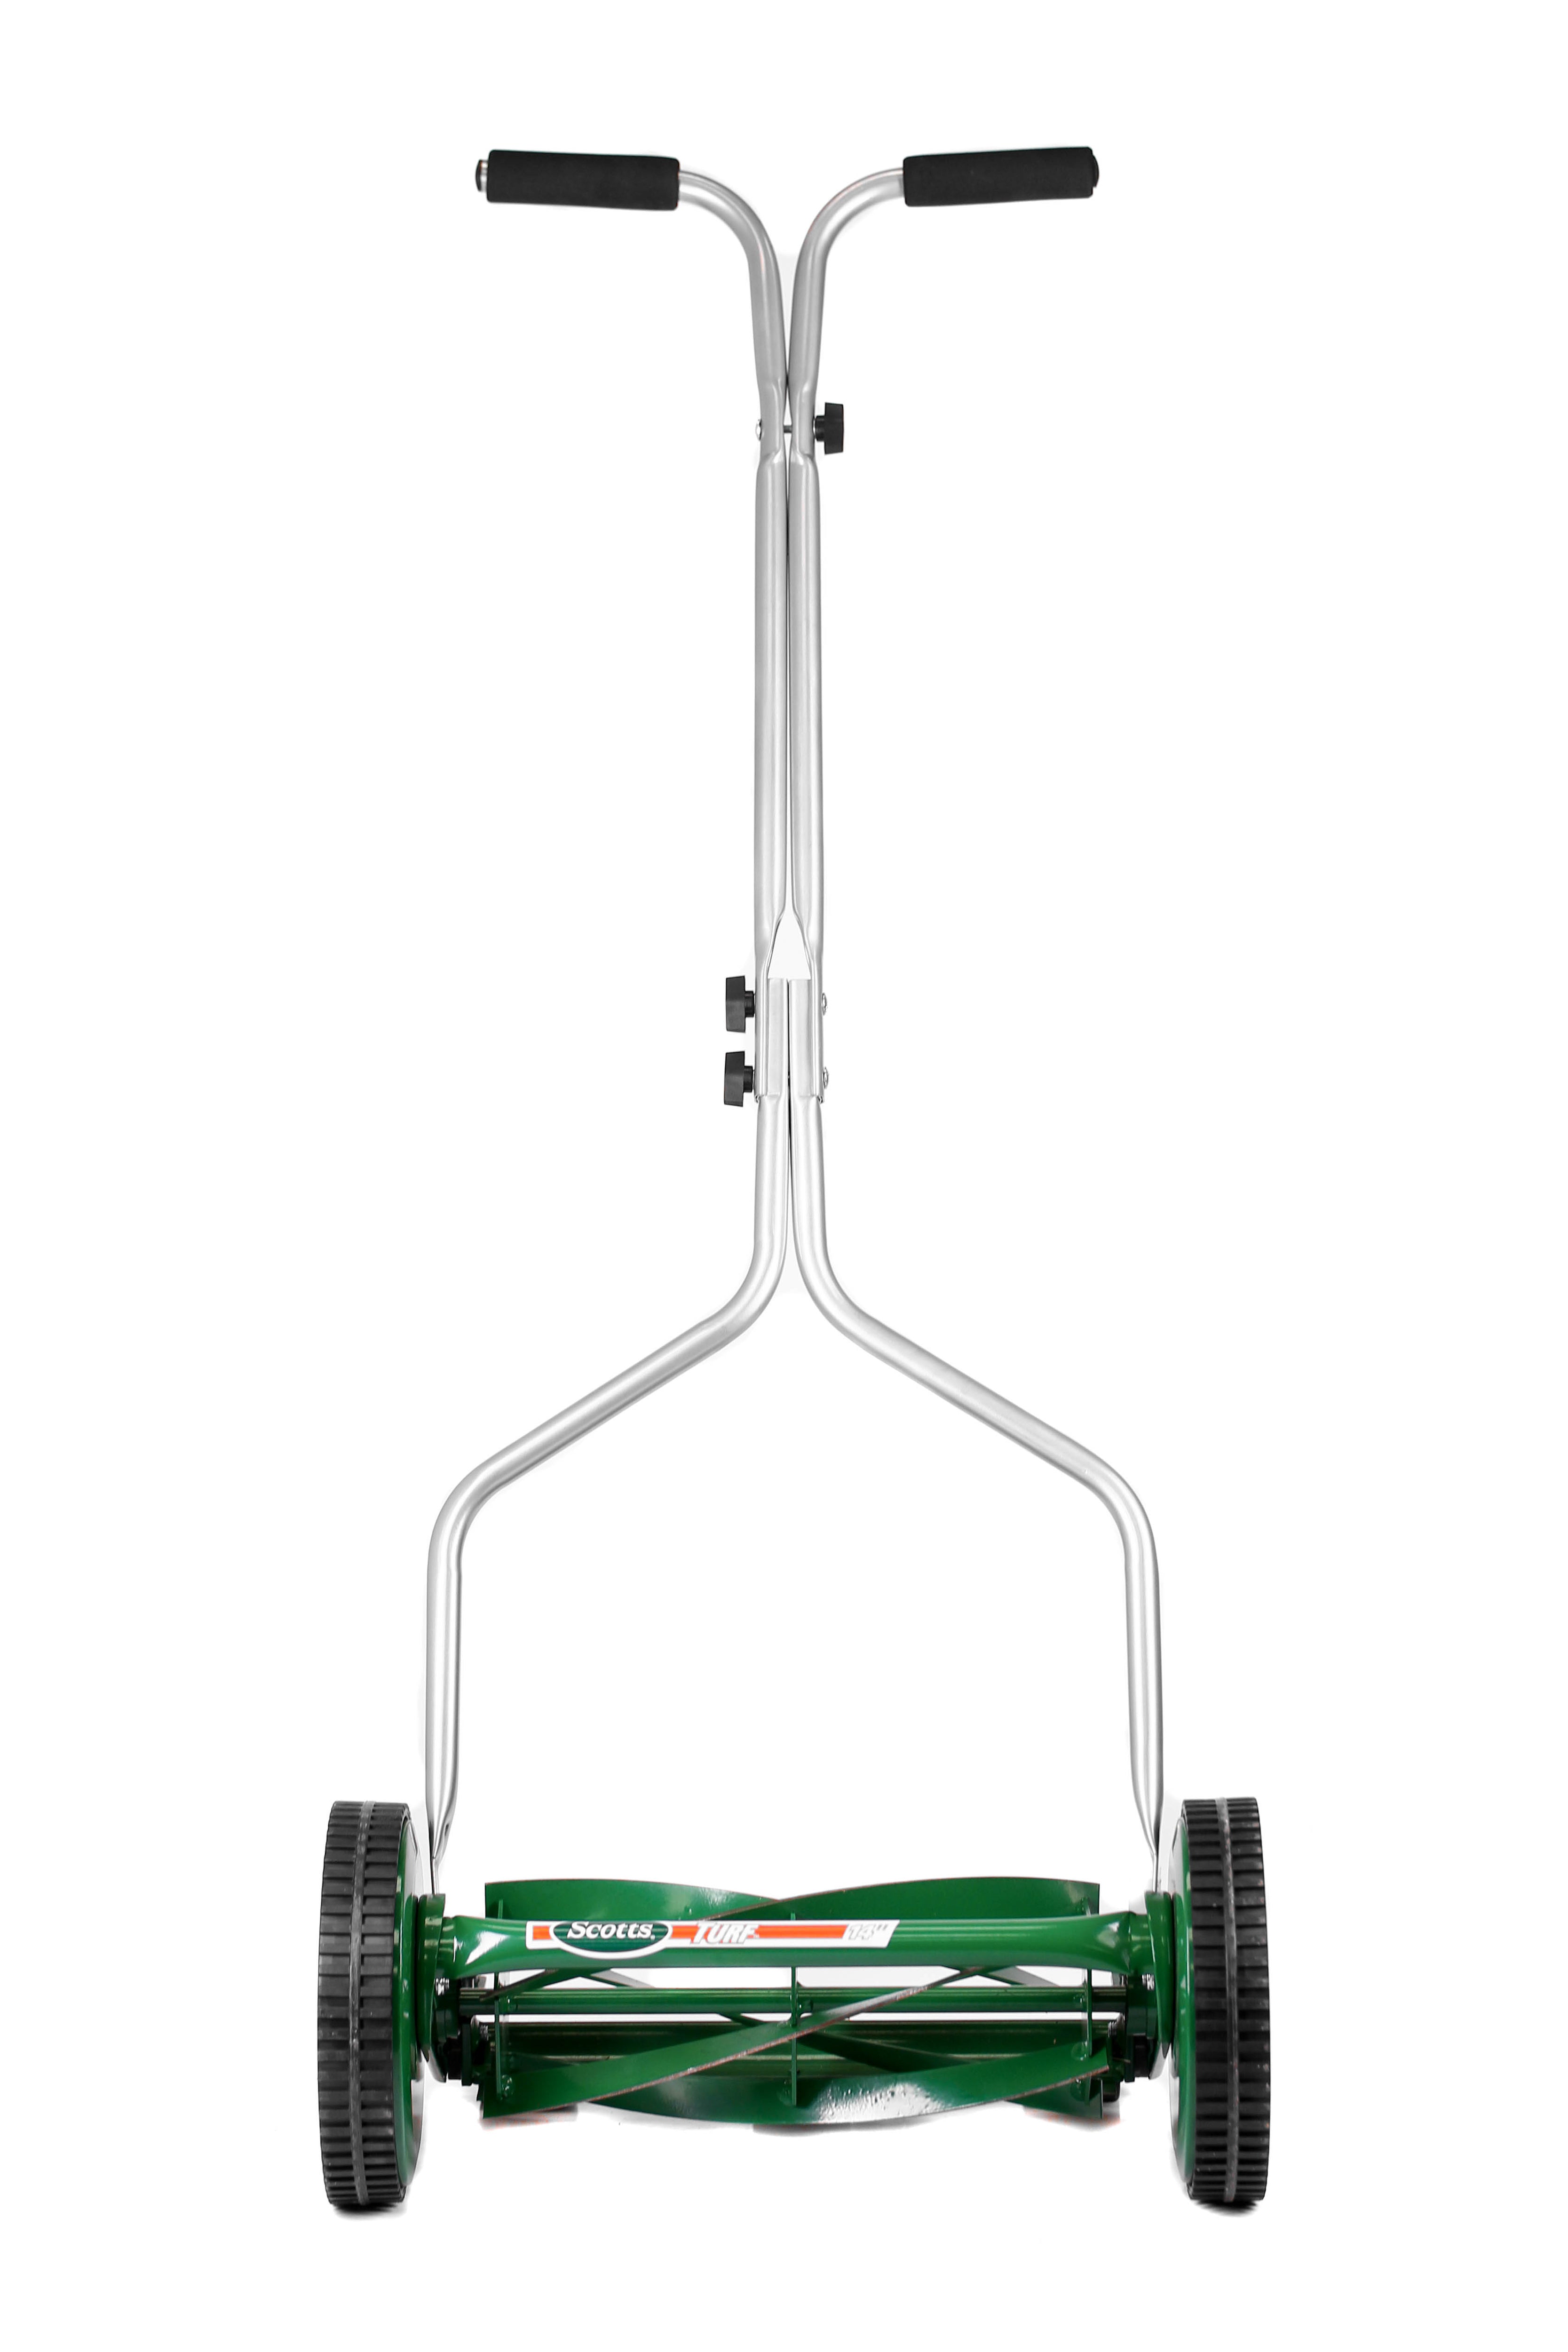 Scotts 14 Manual Reel Mower – American Lawn Mower Co. EST